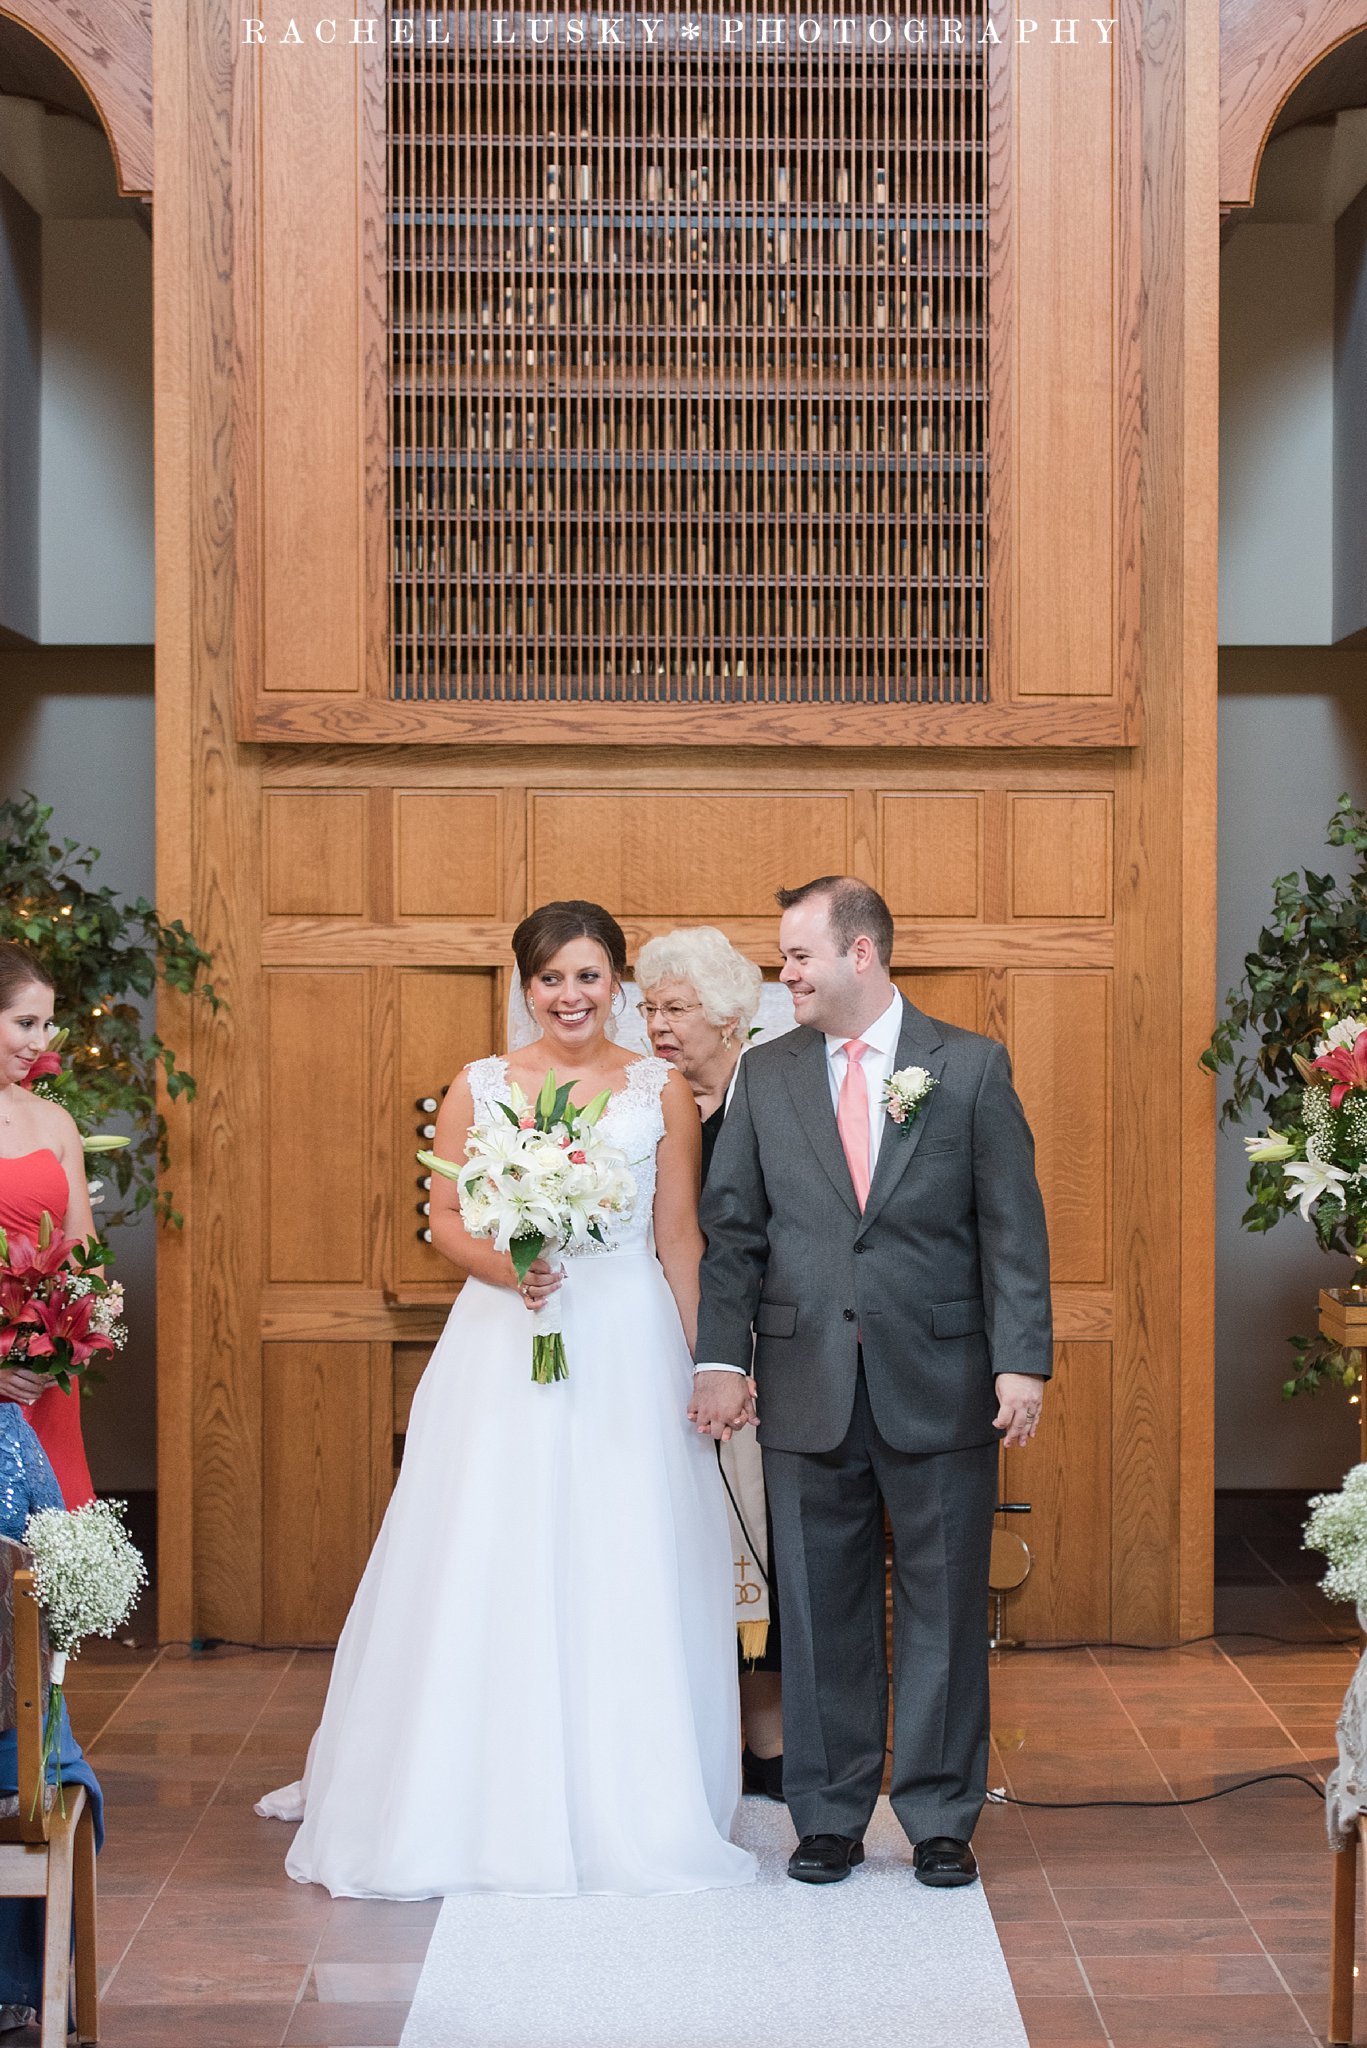 Penn State Behrend Smith Chapel Wedding